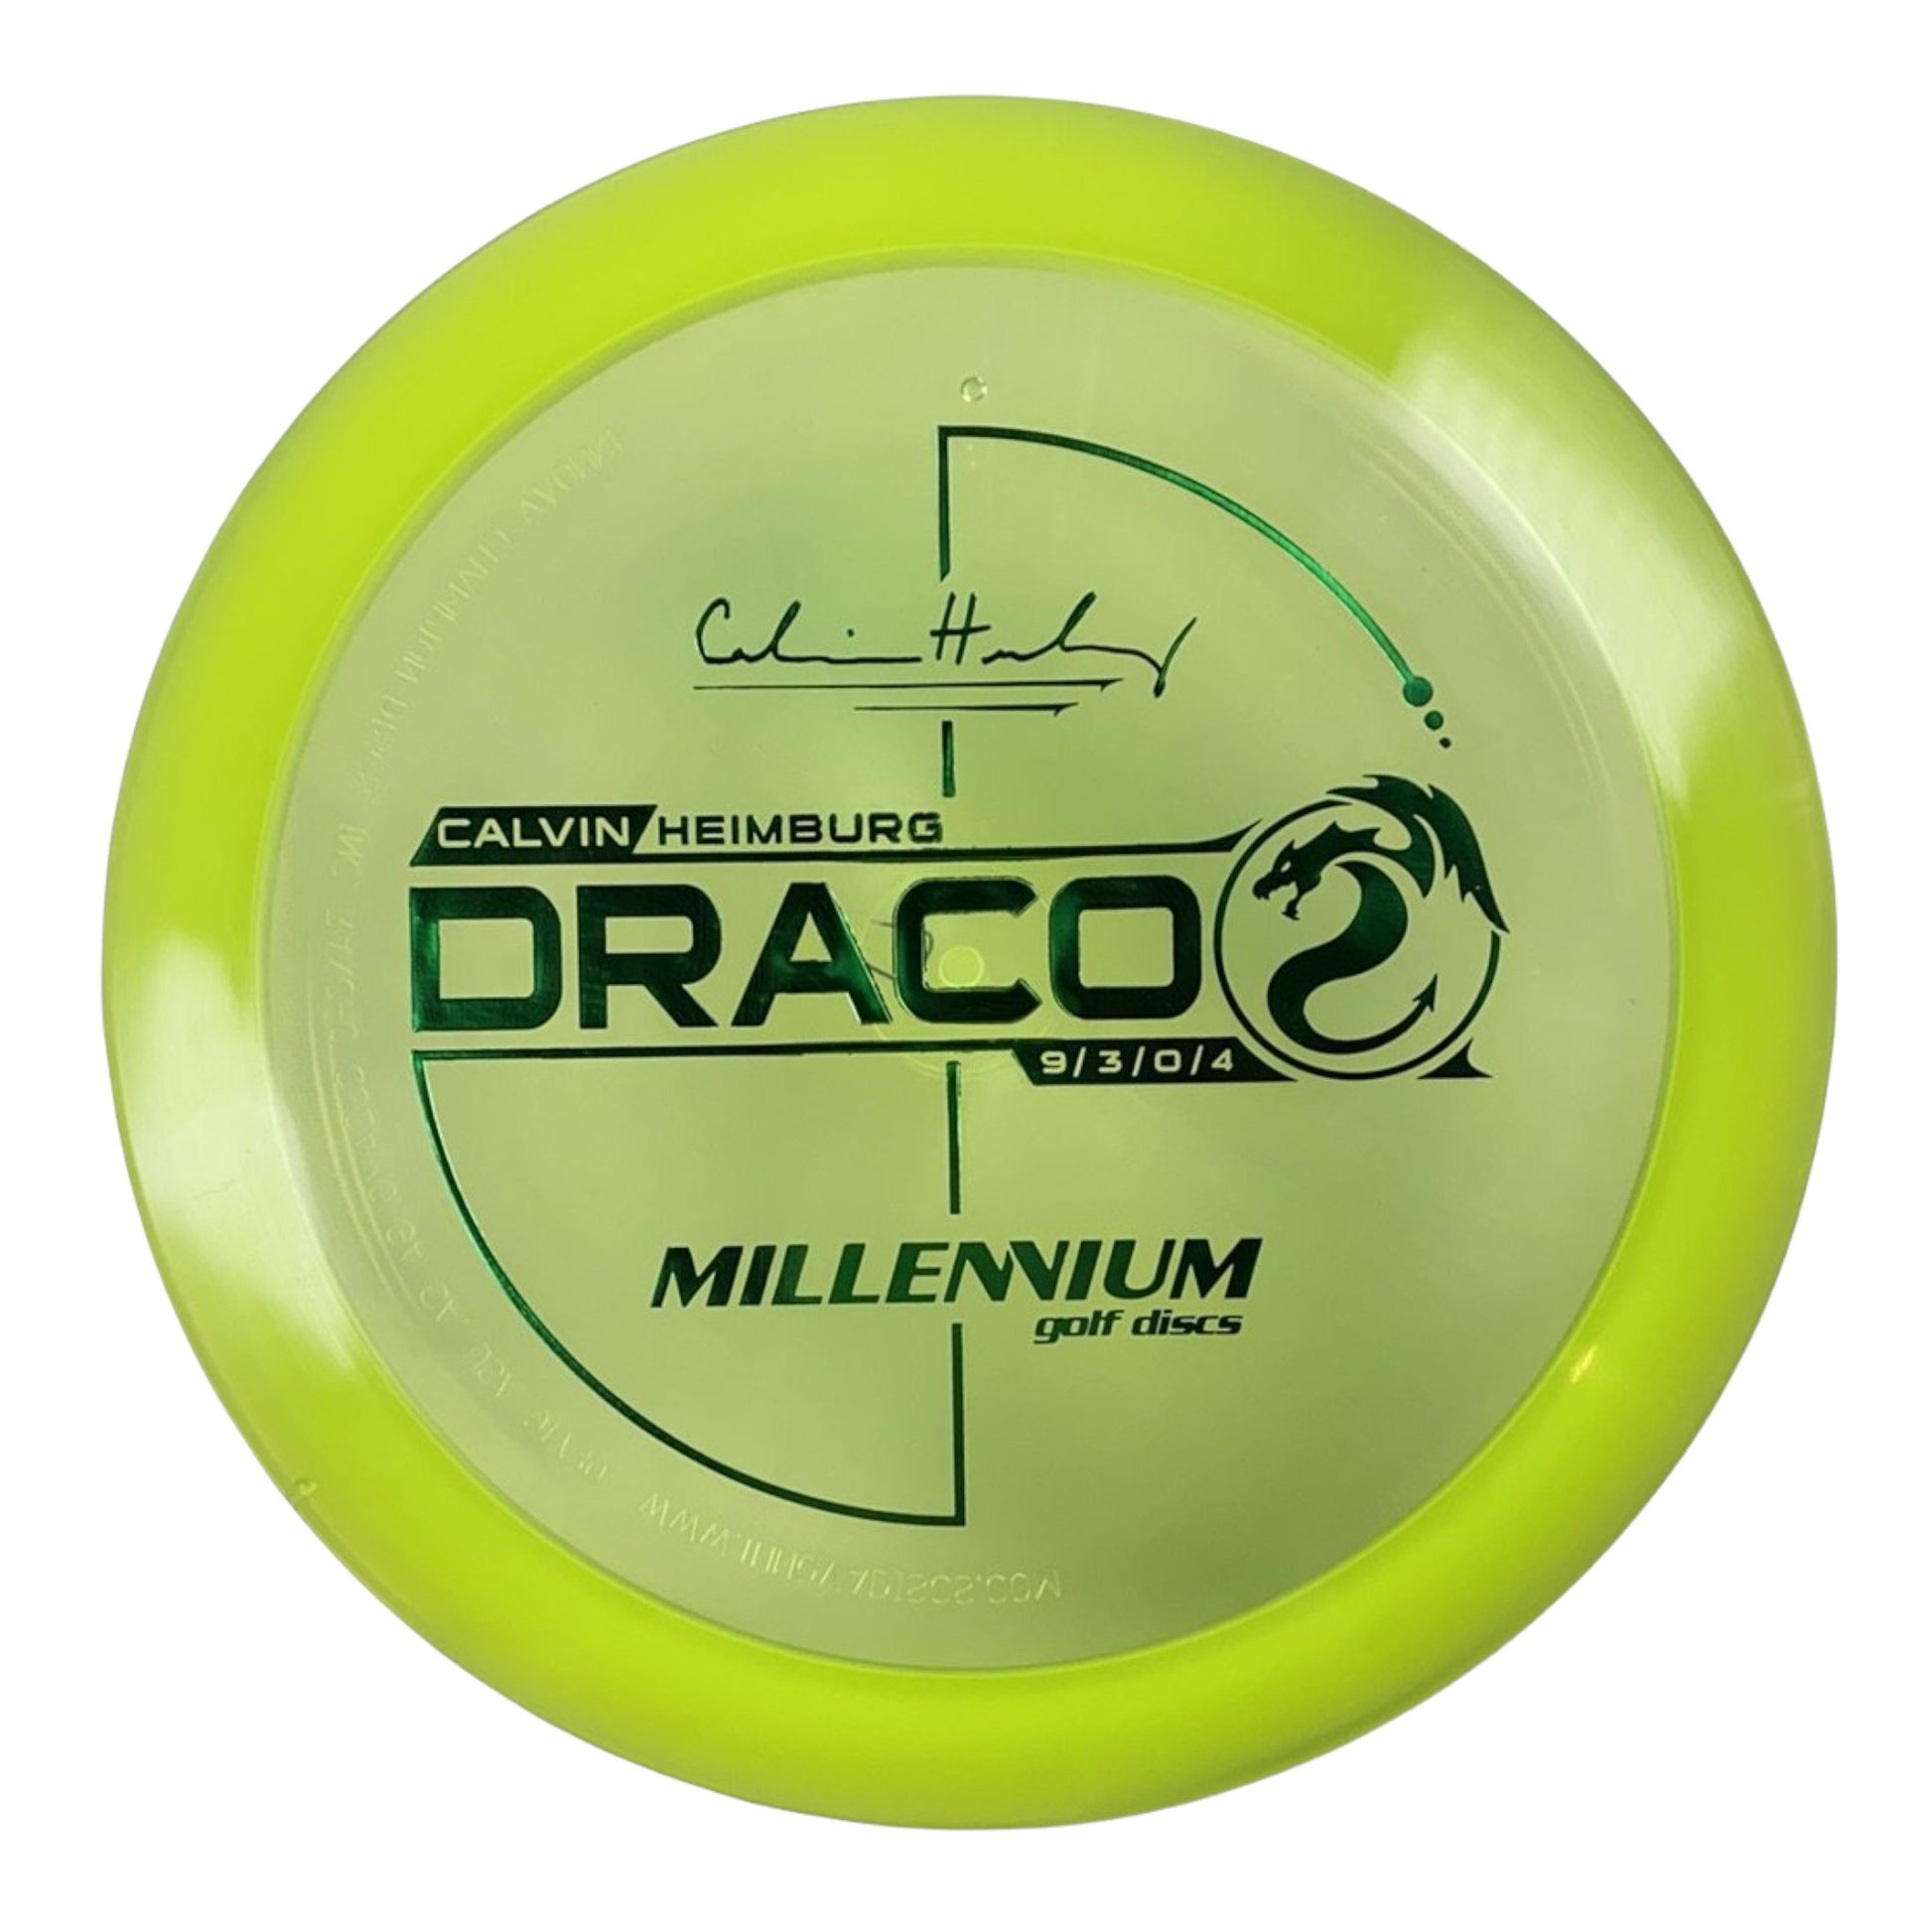 Millennium Golf Discs Draco | Quantum | Yellow/Green 170g (Calvin Heimburg) Disc Golf